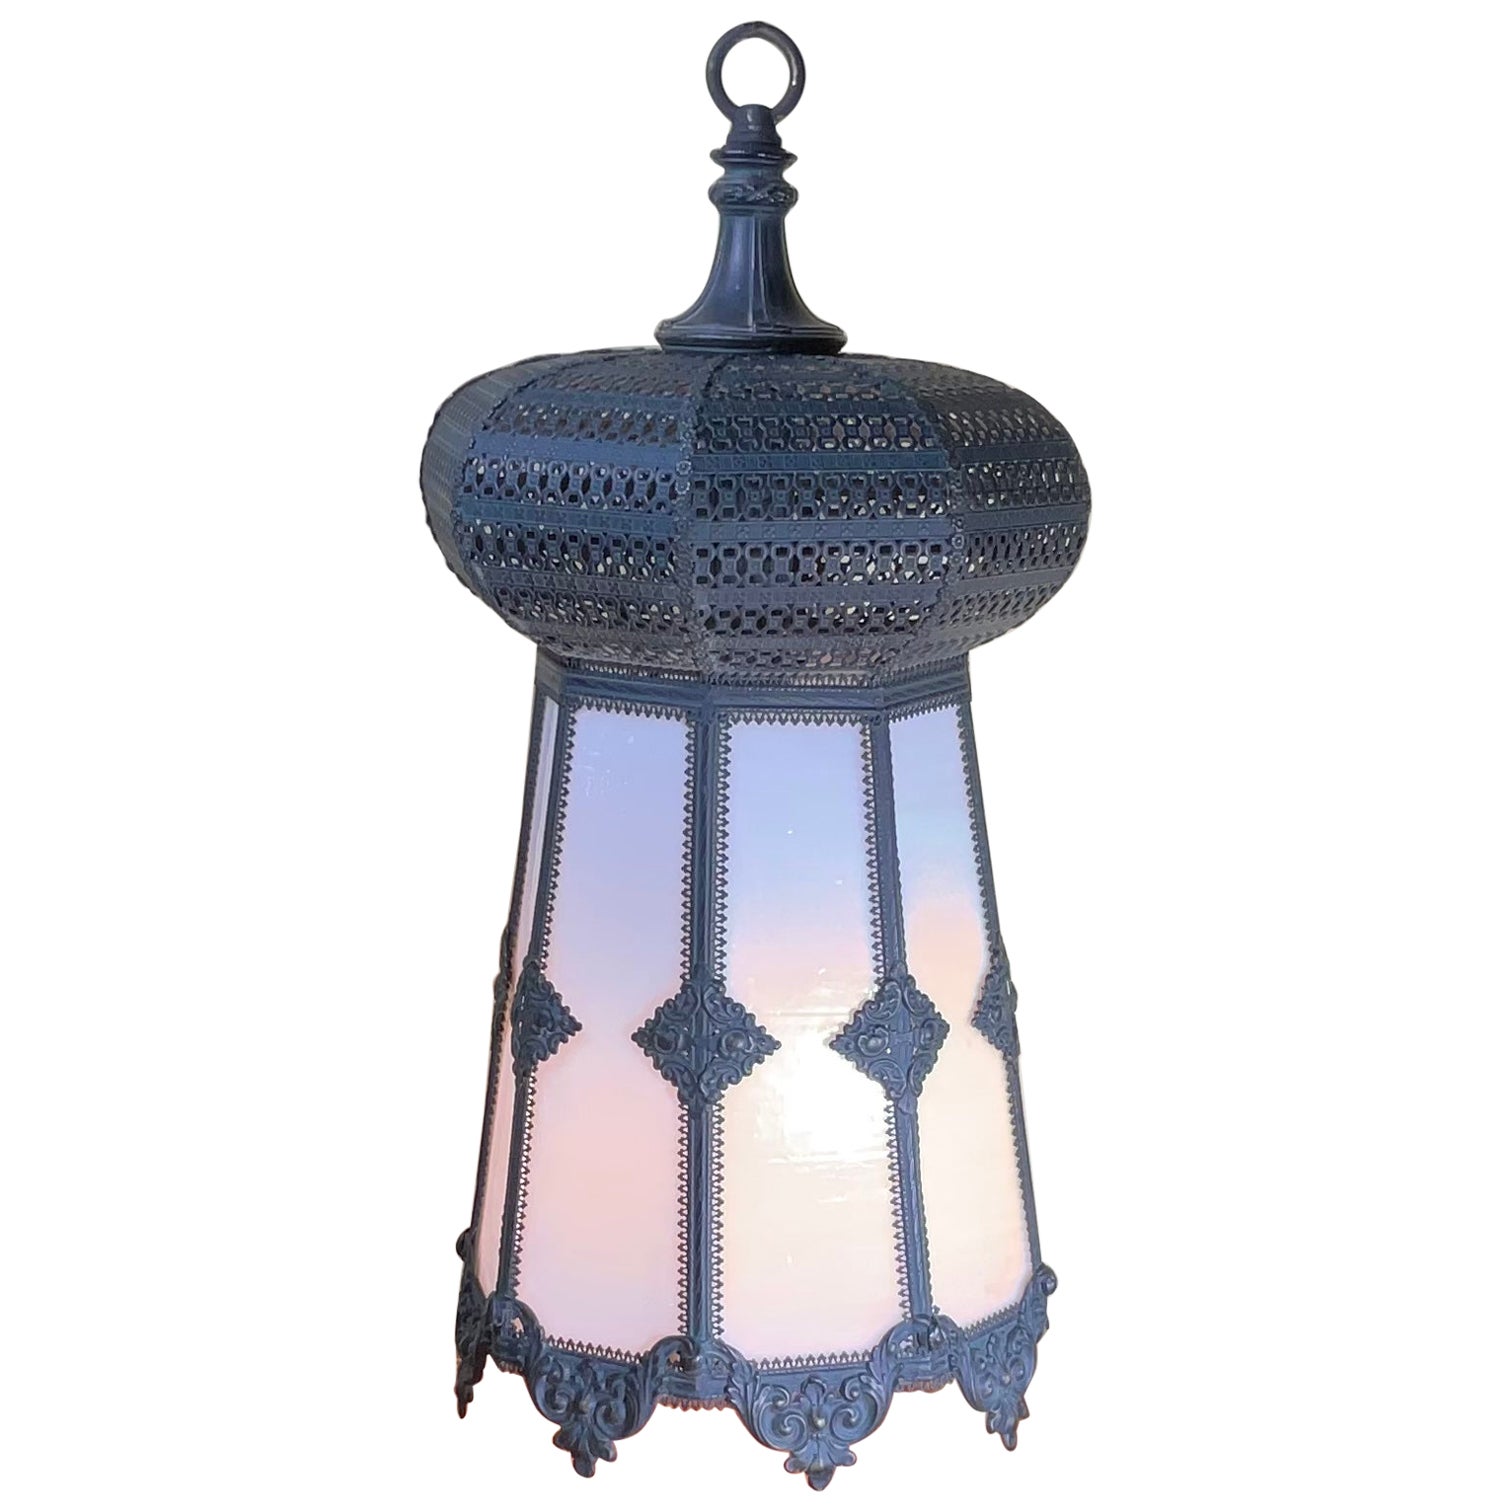 Moorish Or Gothic Style Hanging Pendant Light